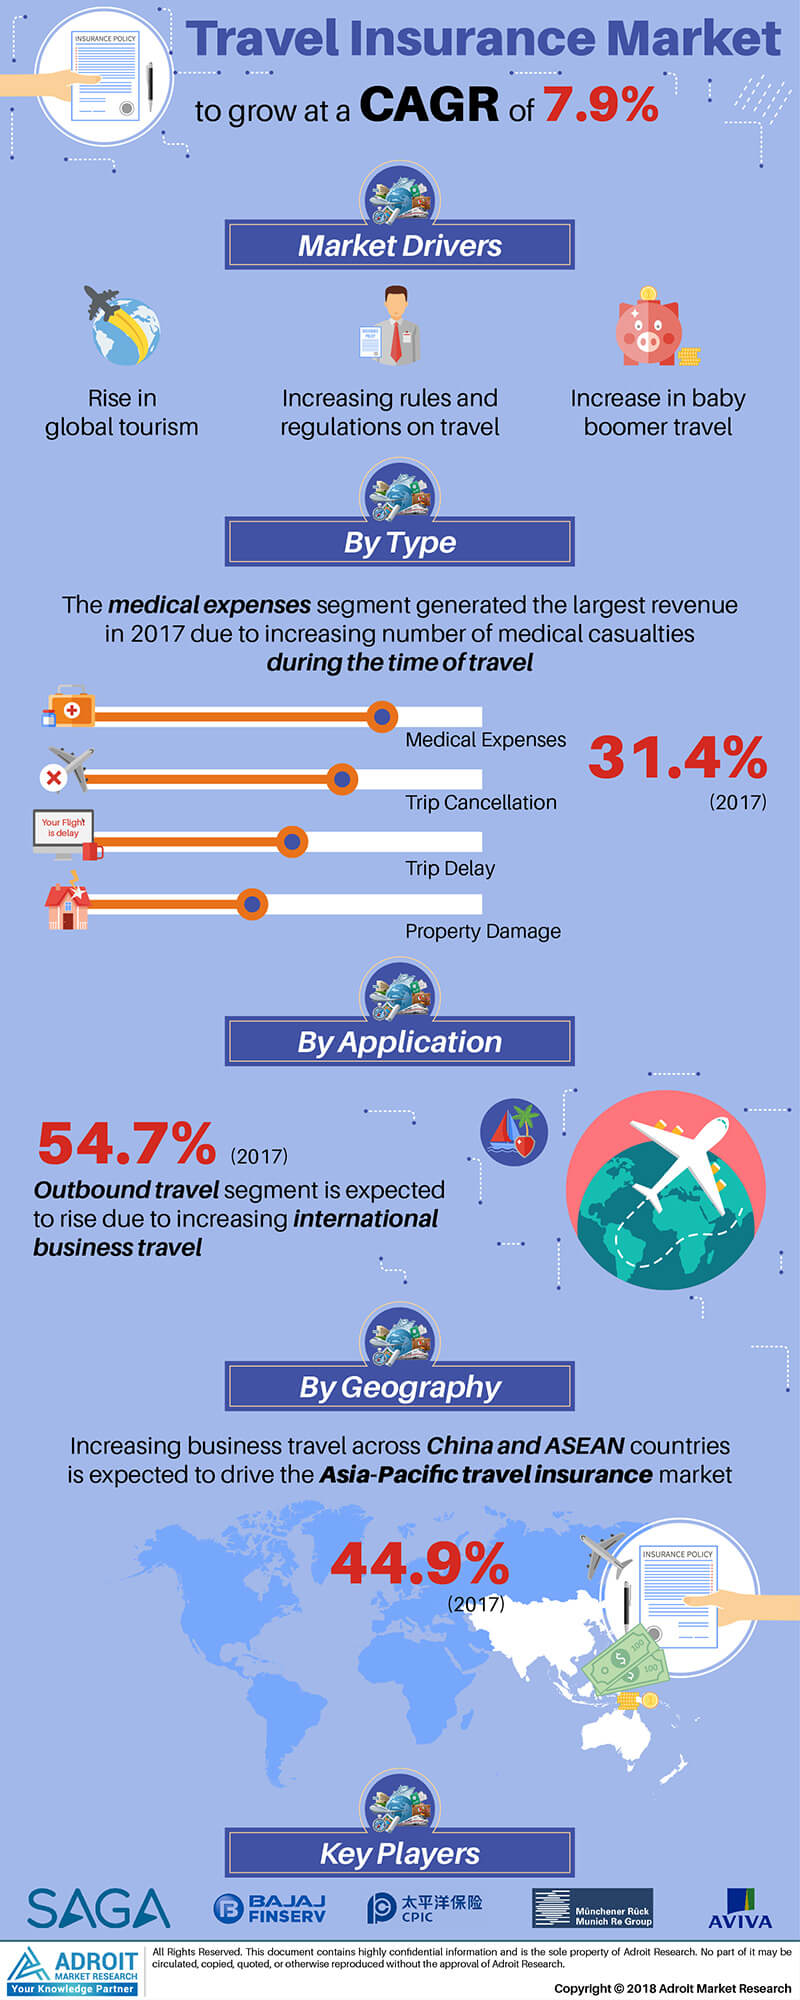 Travel Insurance Market Size and Forecast 20182025